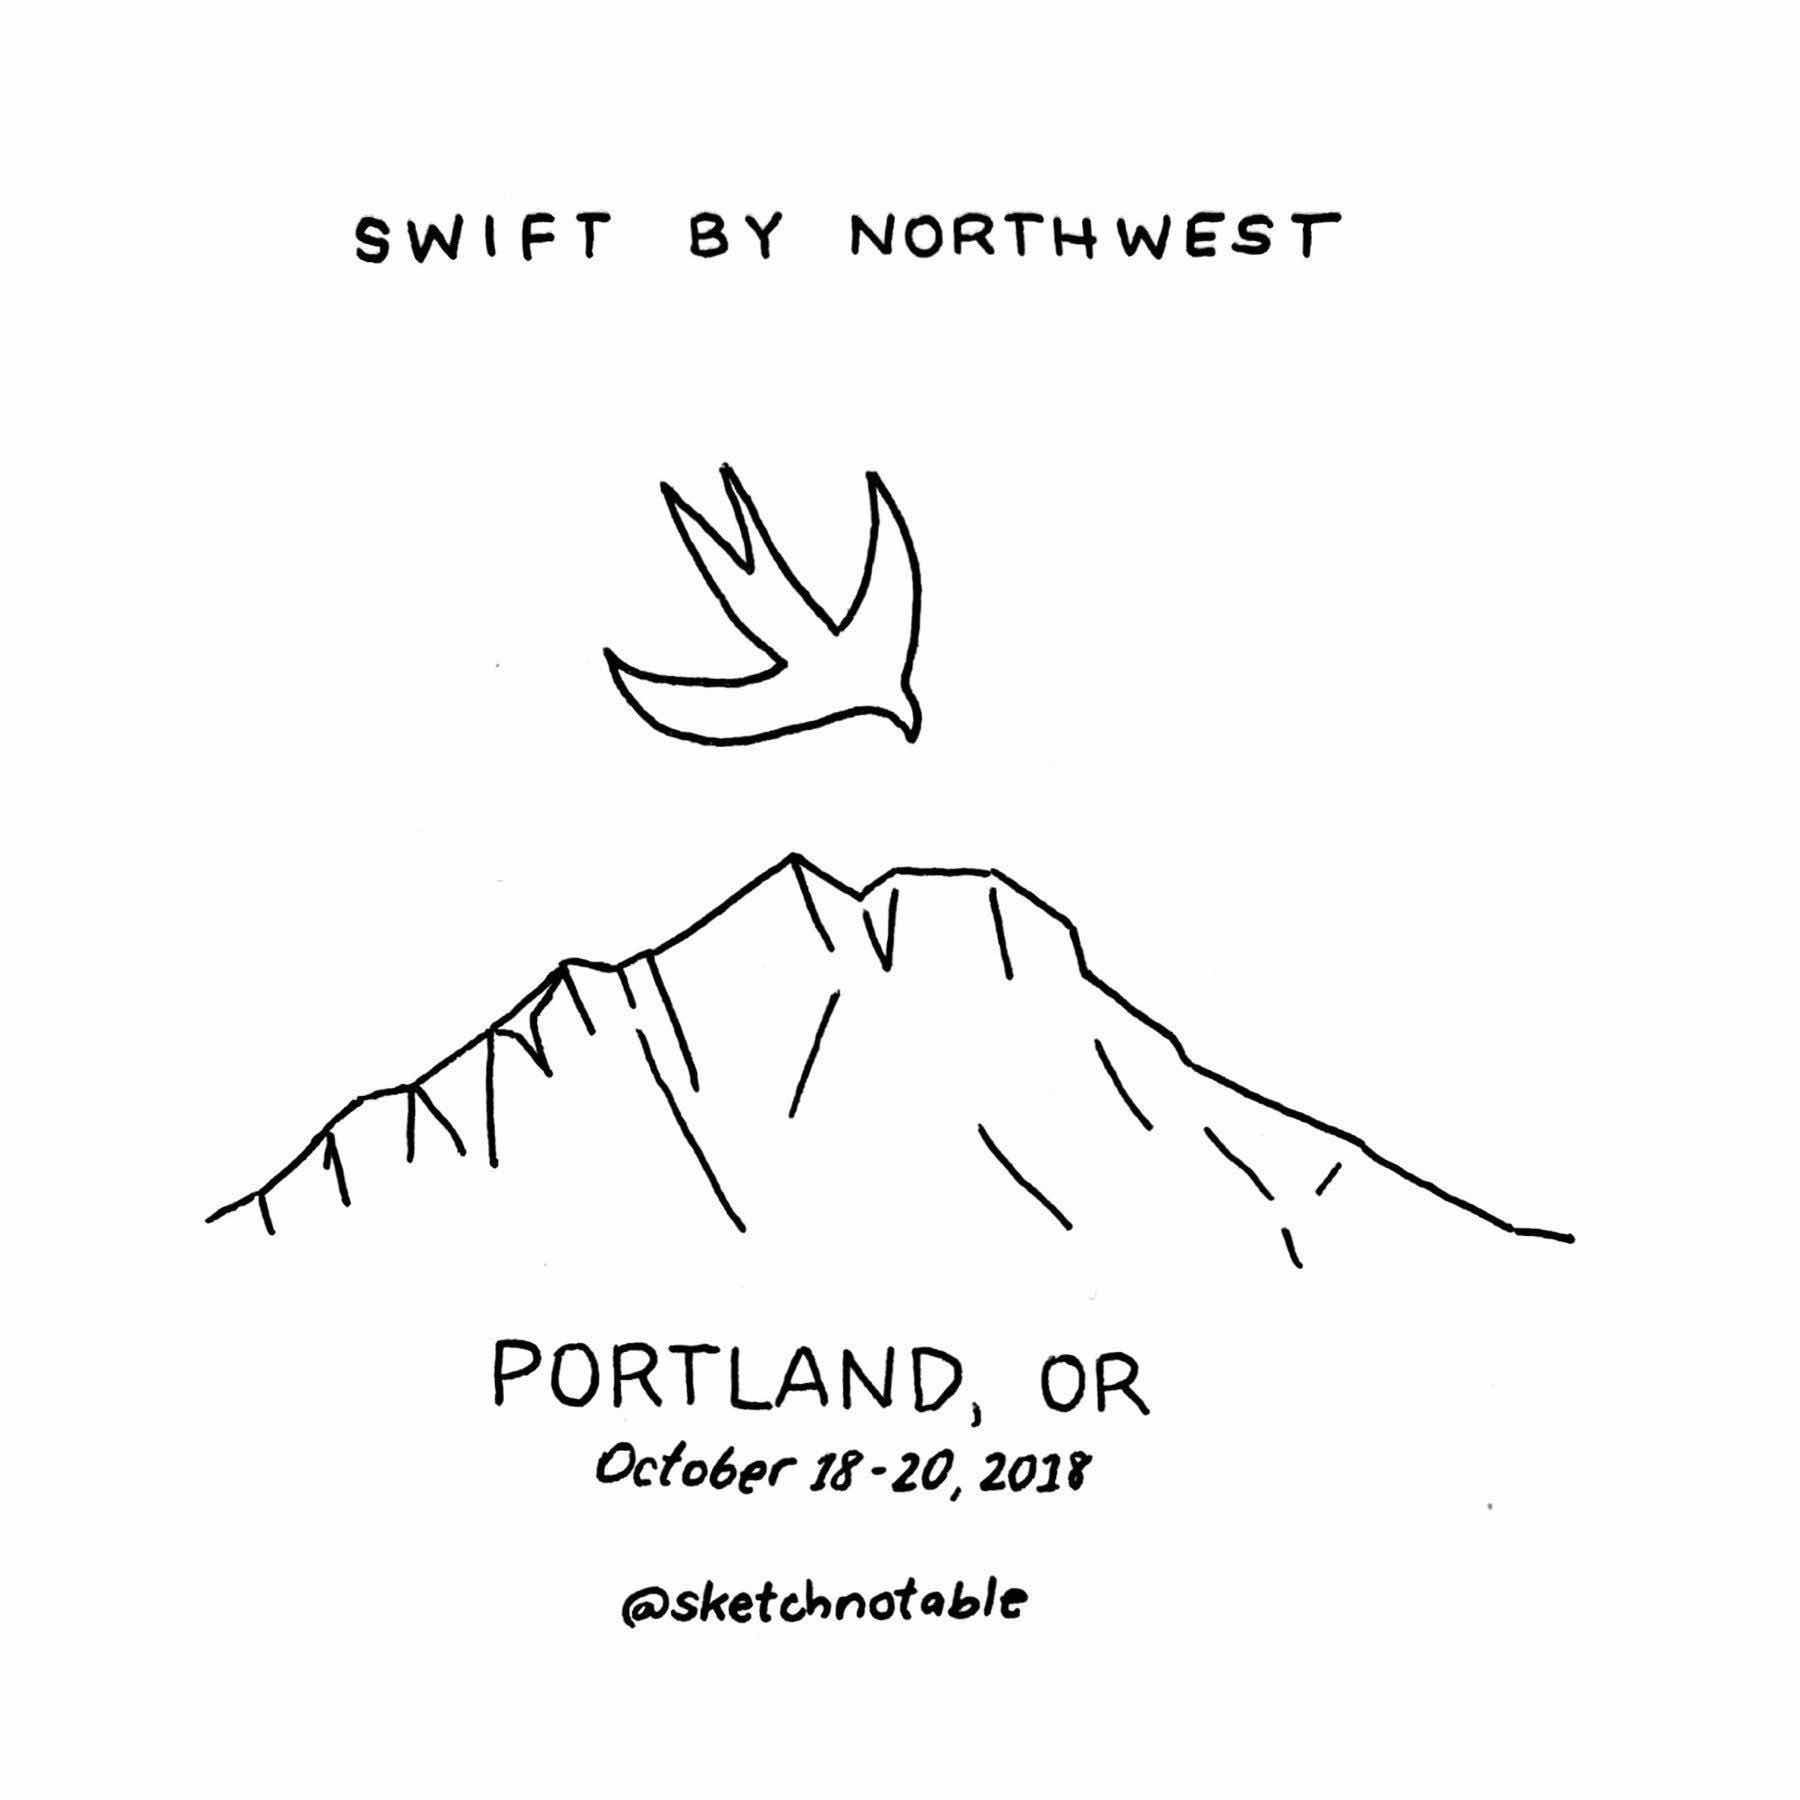 Swift by Northwest 2018 Sketchnote 01